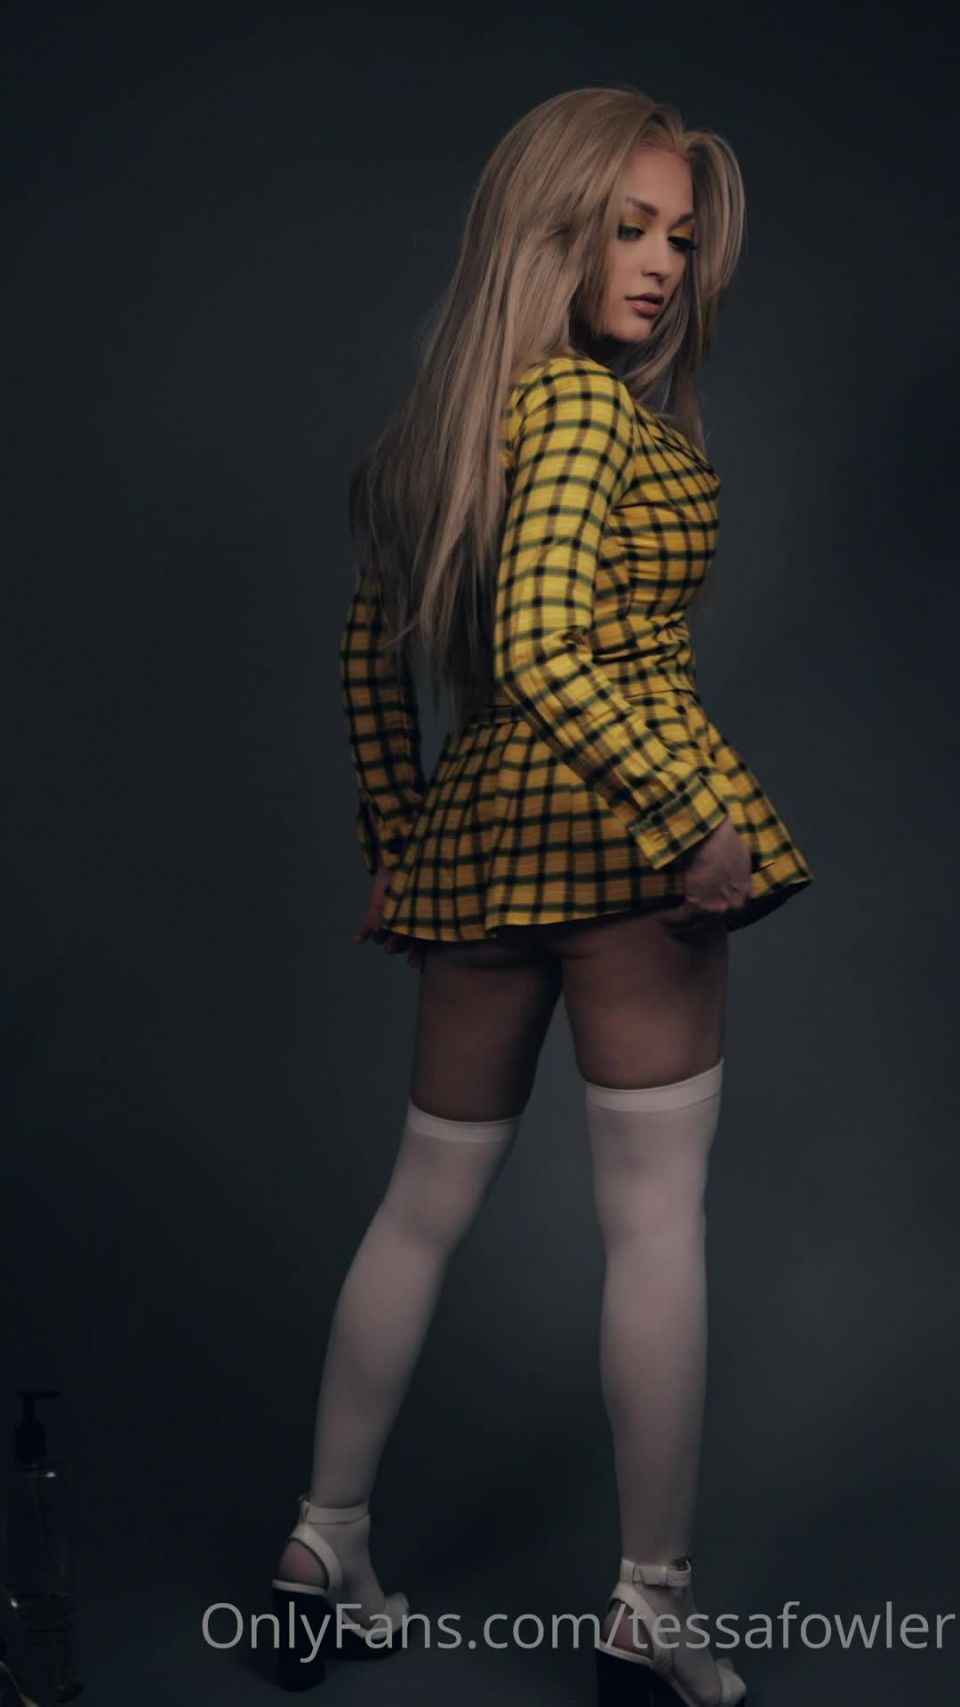 Tessa Fowler - Onlyfans - Yellow Shorts - 10/15/21